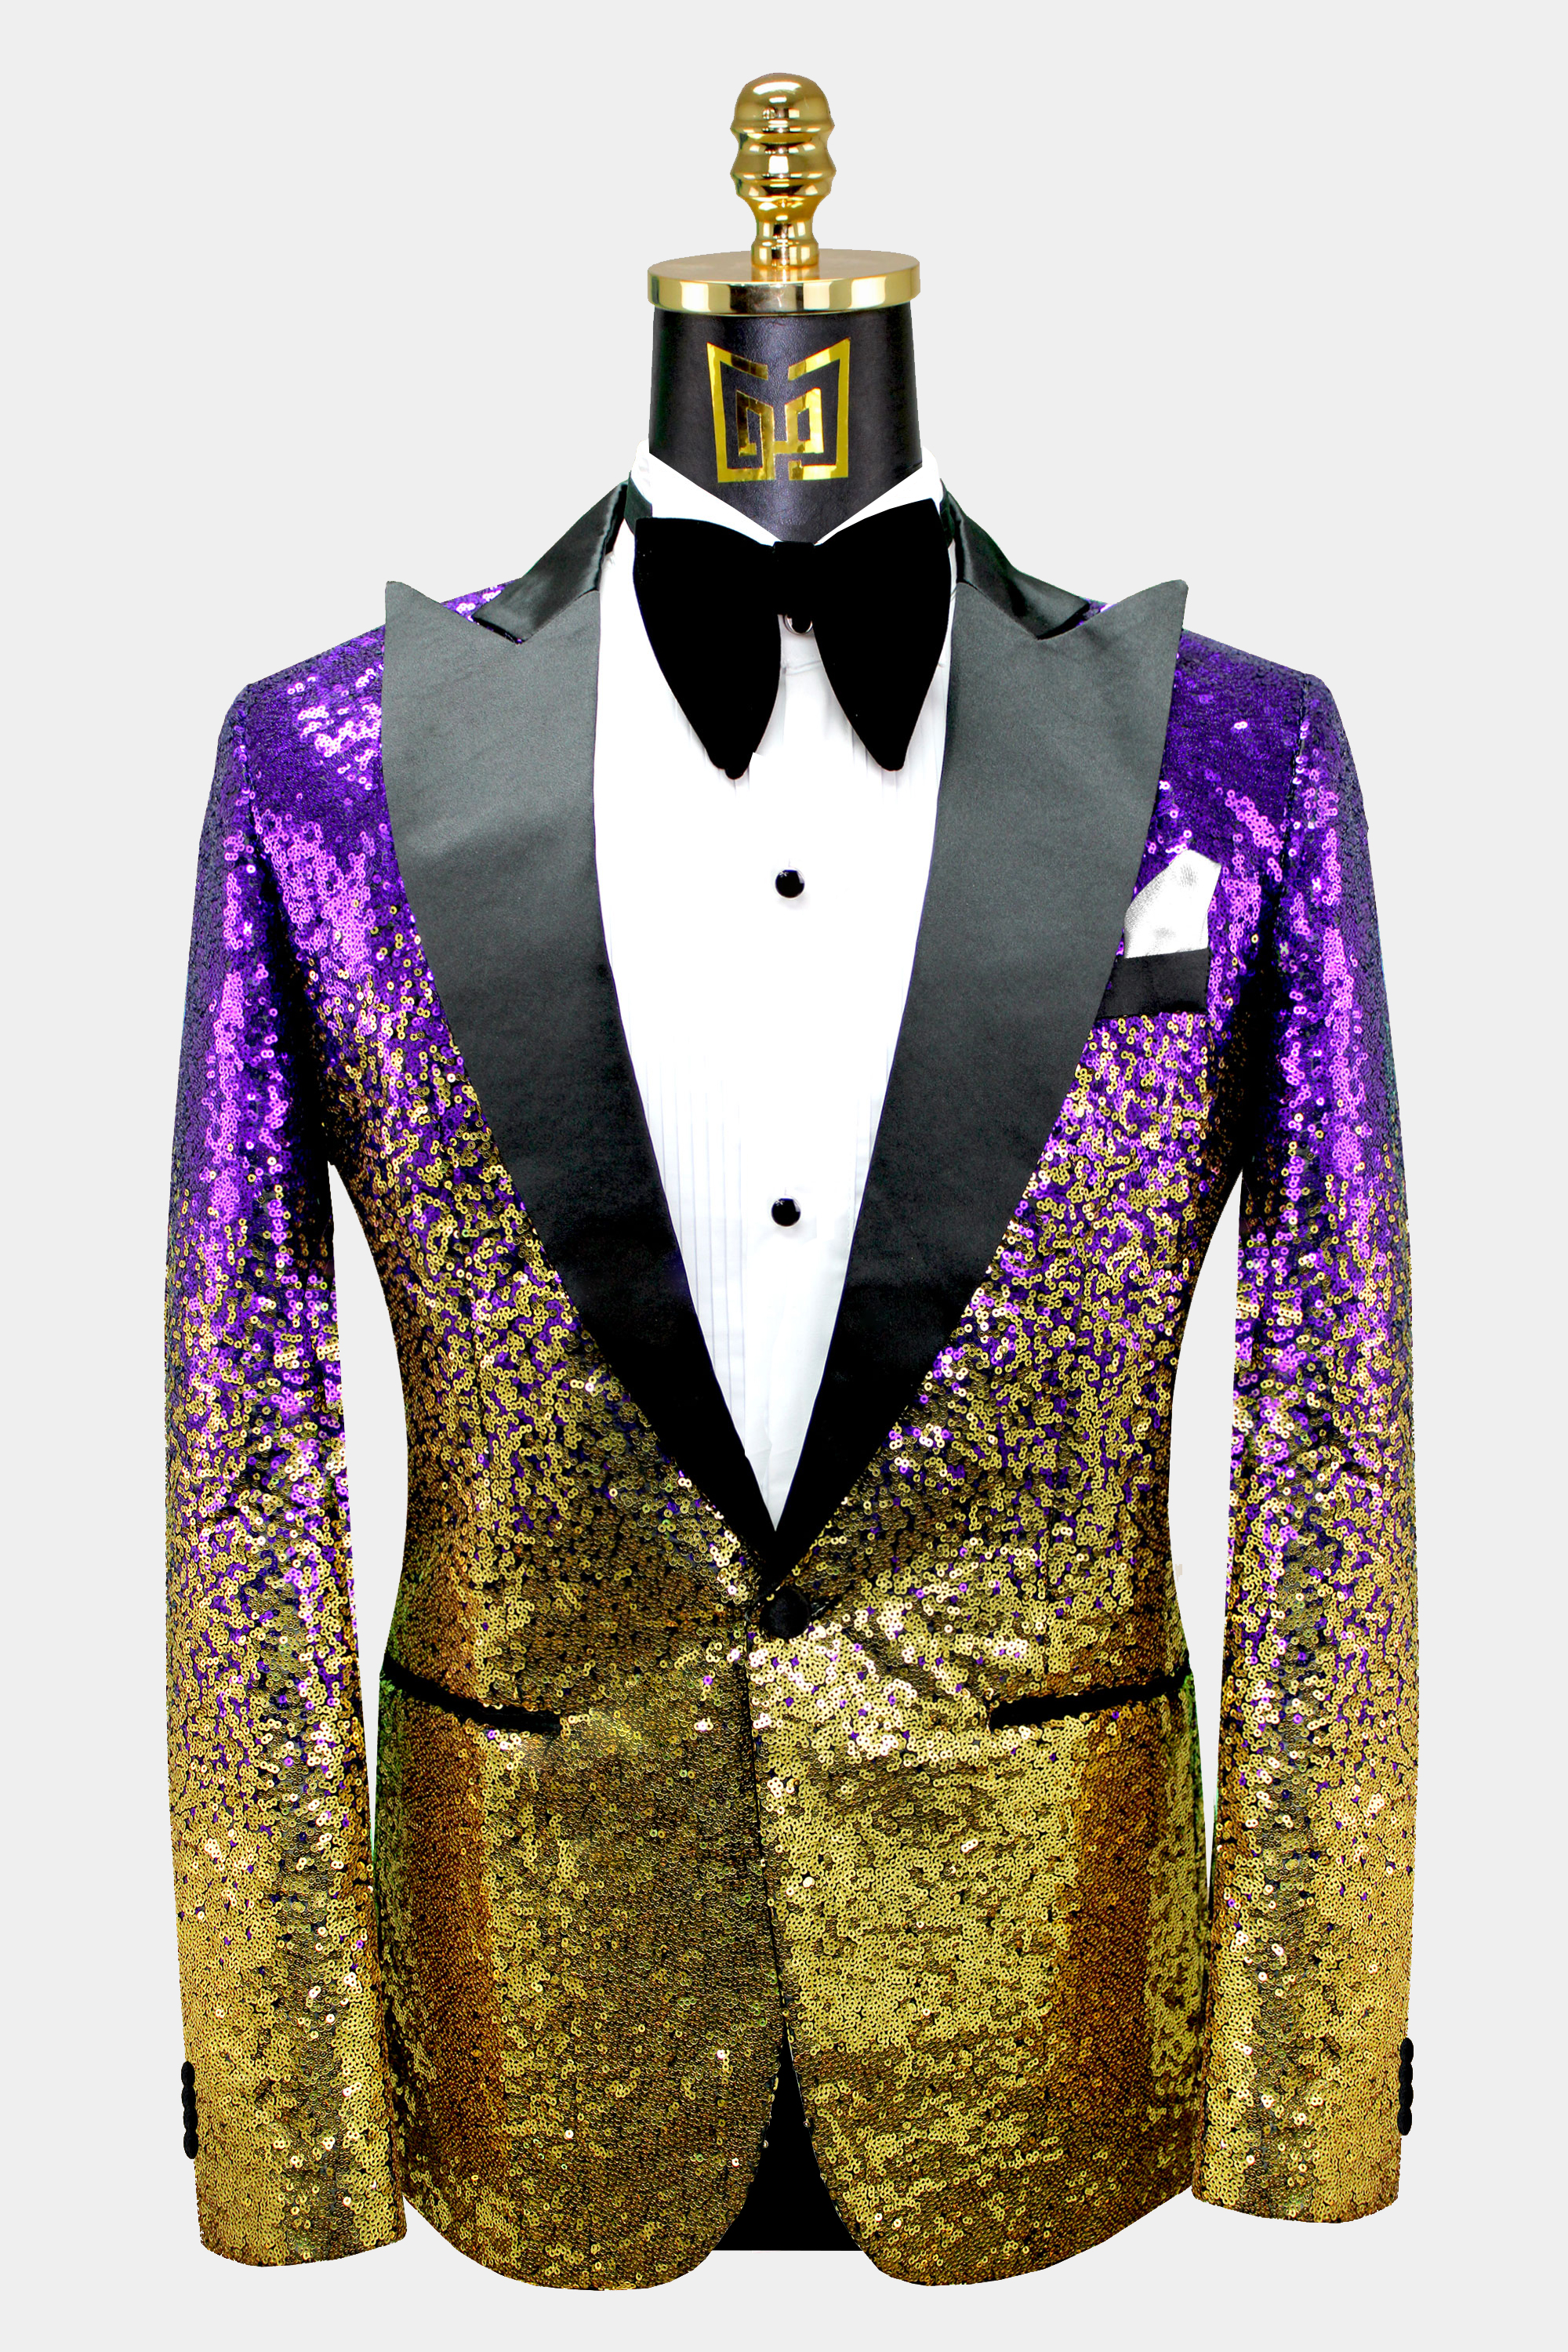 Mens-Purple-and-Gold-Tuxedo-Jacket-Wedding-Groom-Bling-Prom-Blazer-Suit-from-Gentlemansguru.com_